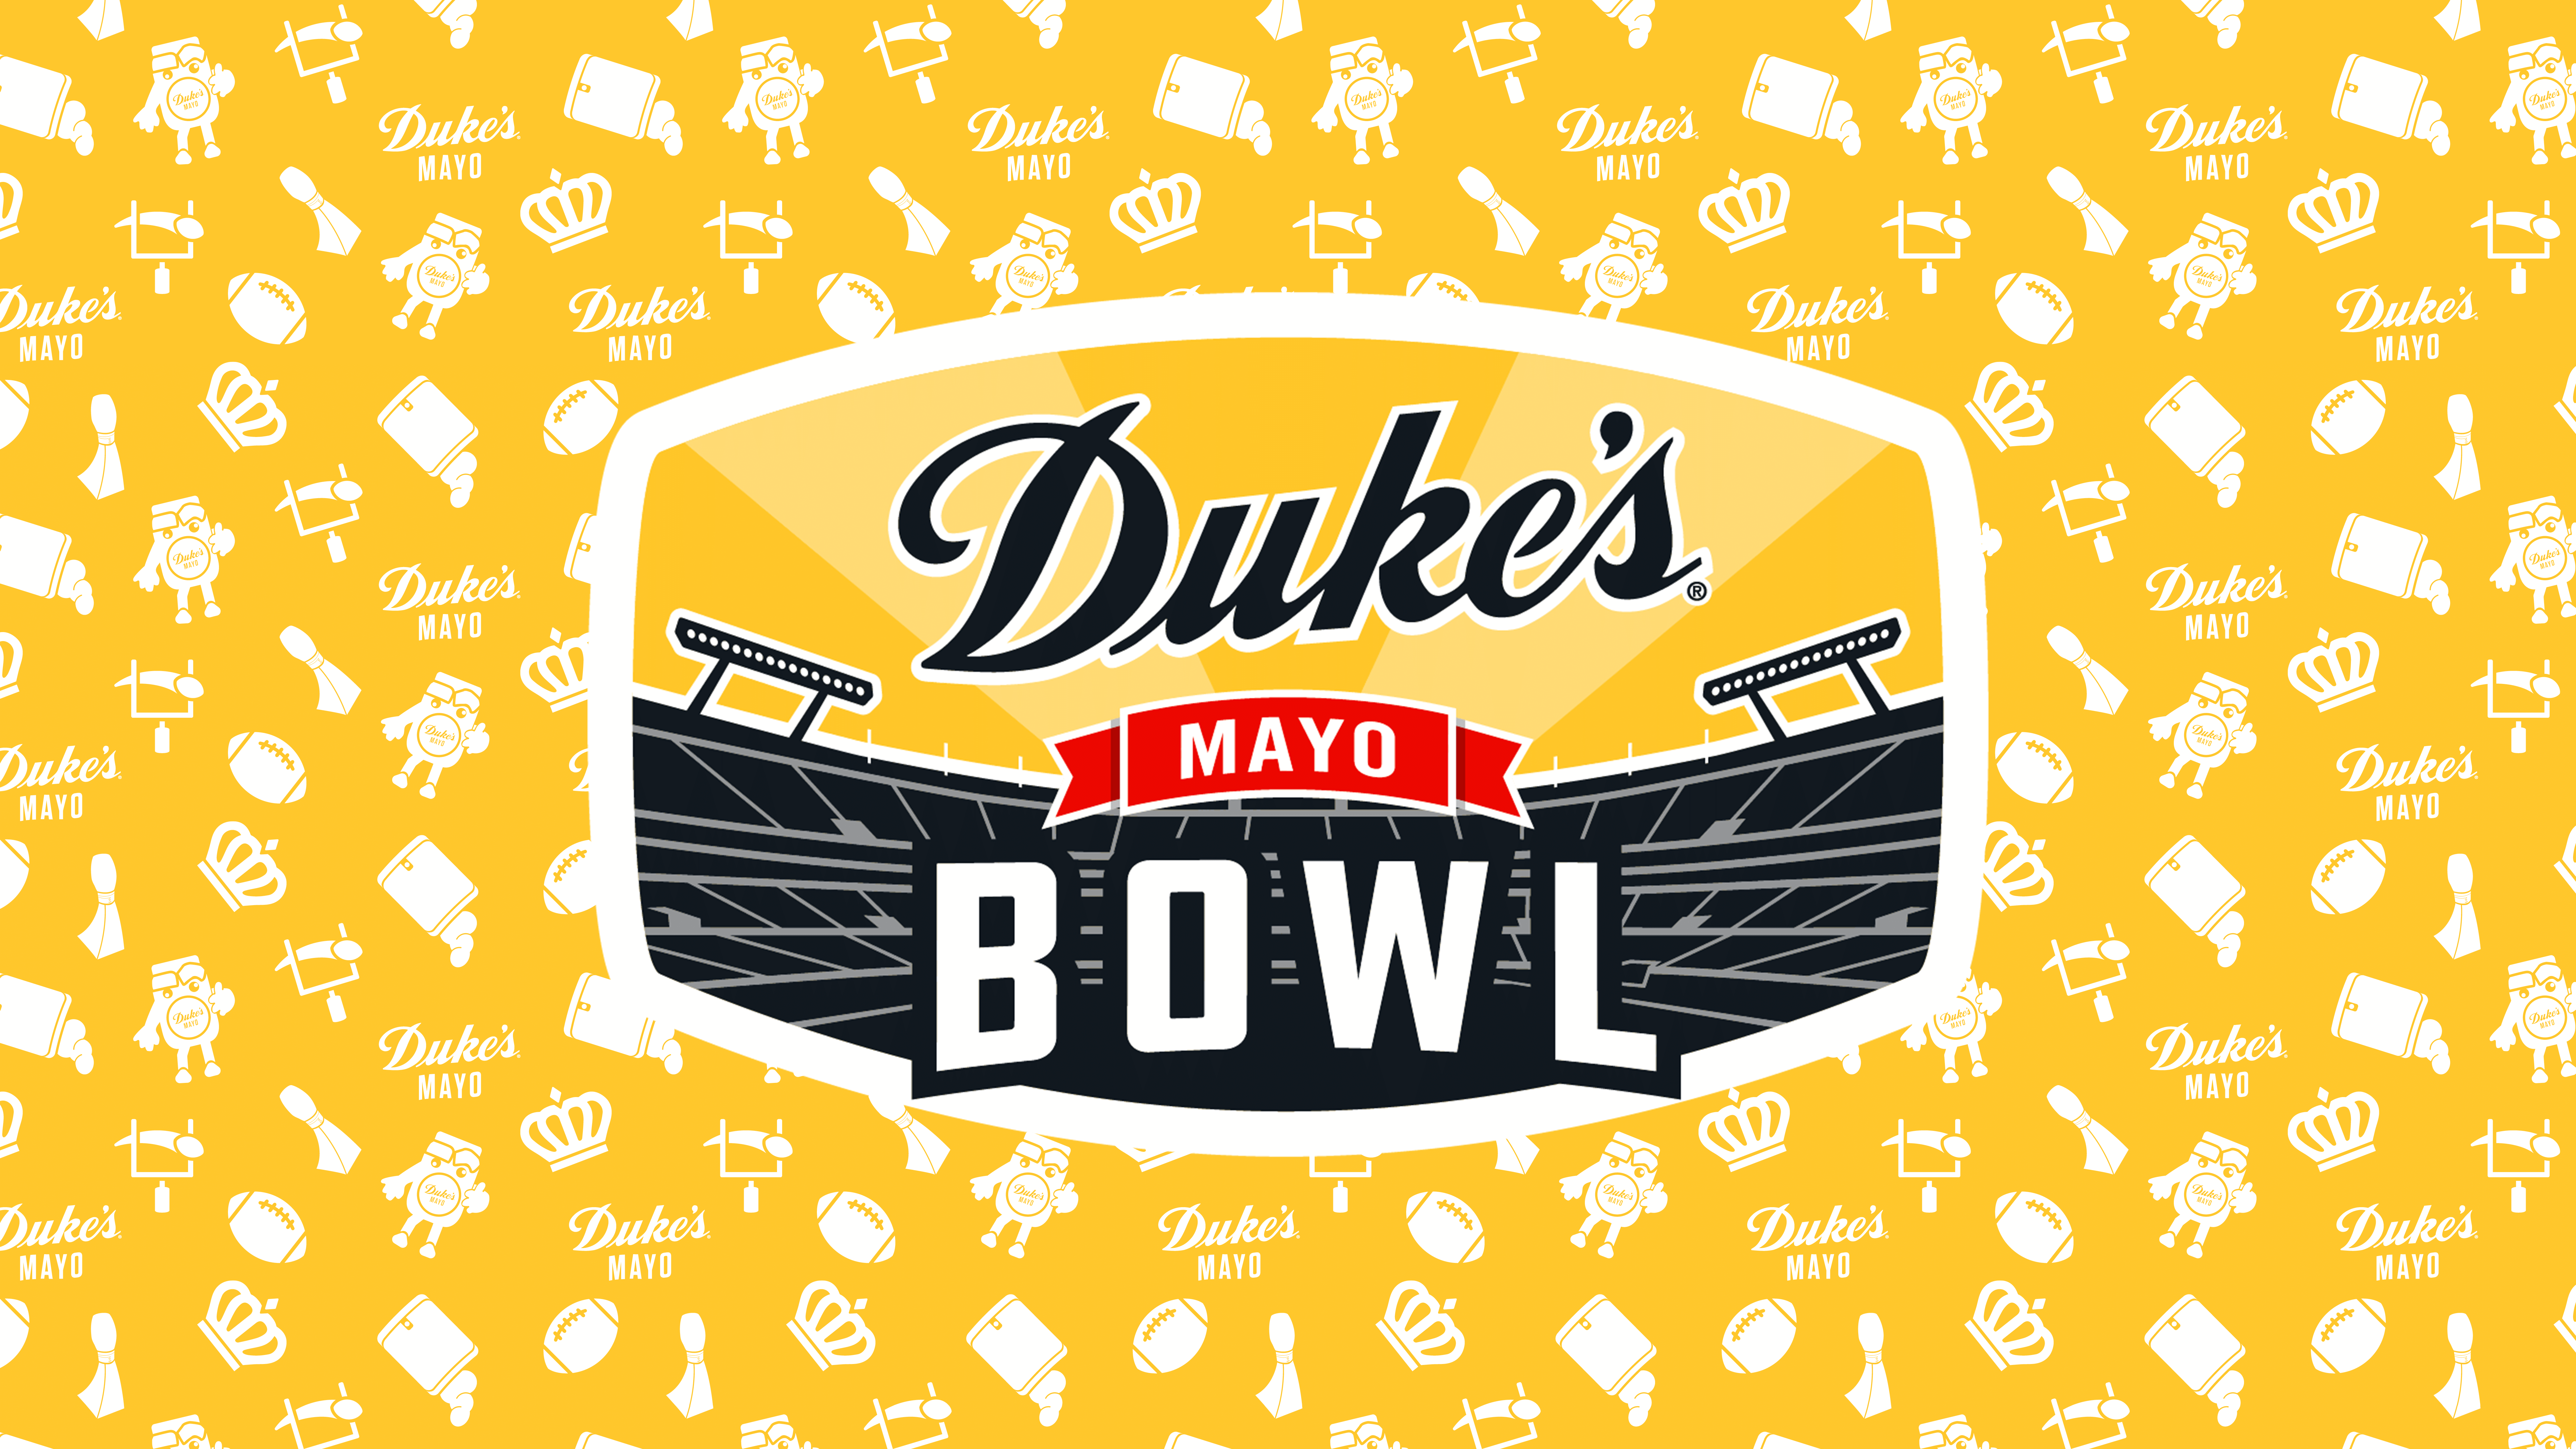 Charlotte Sports Foundation celebrates 50 years of Title IX through NIL campaign surrounding Duke’s Mayo Bowl